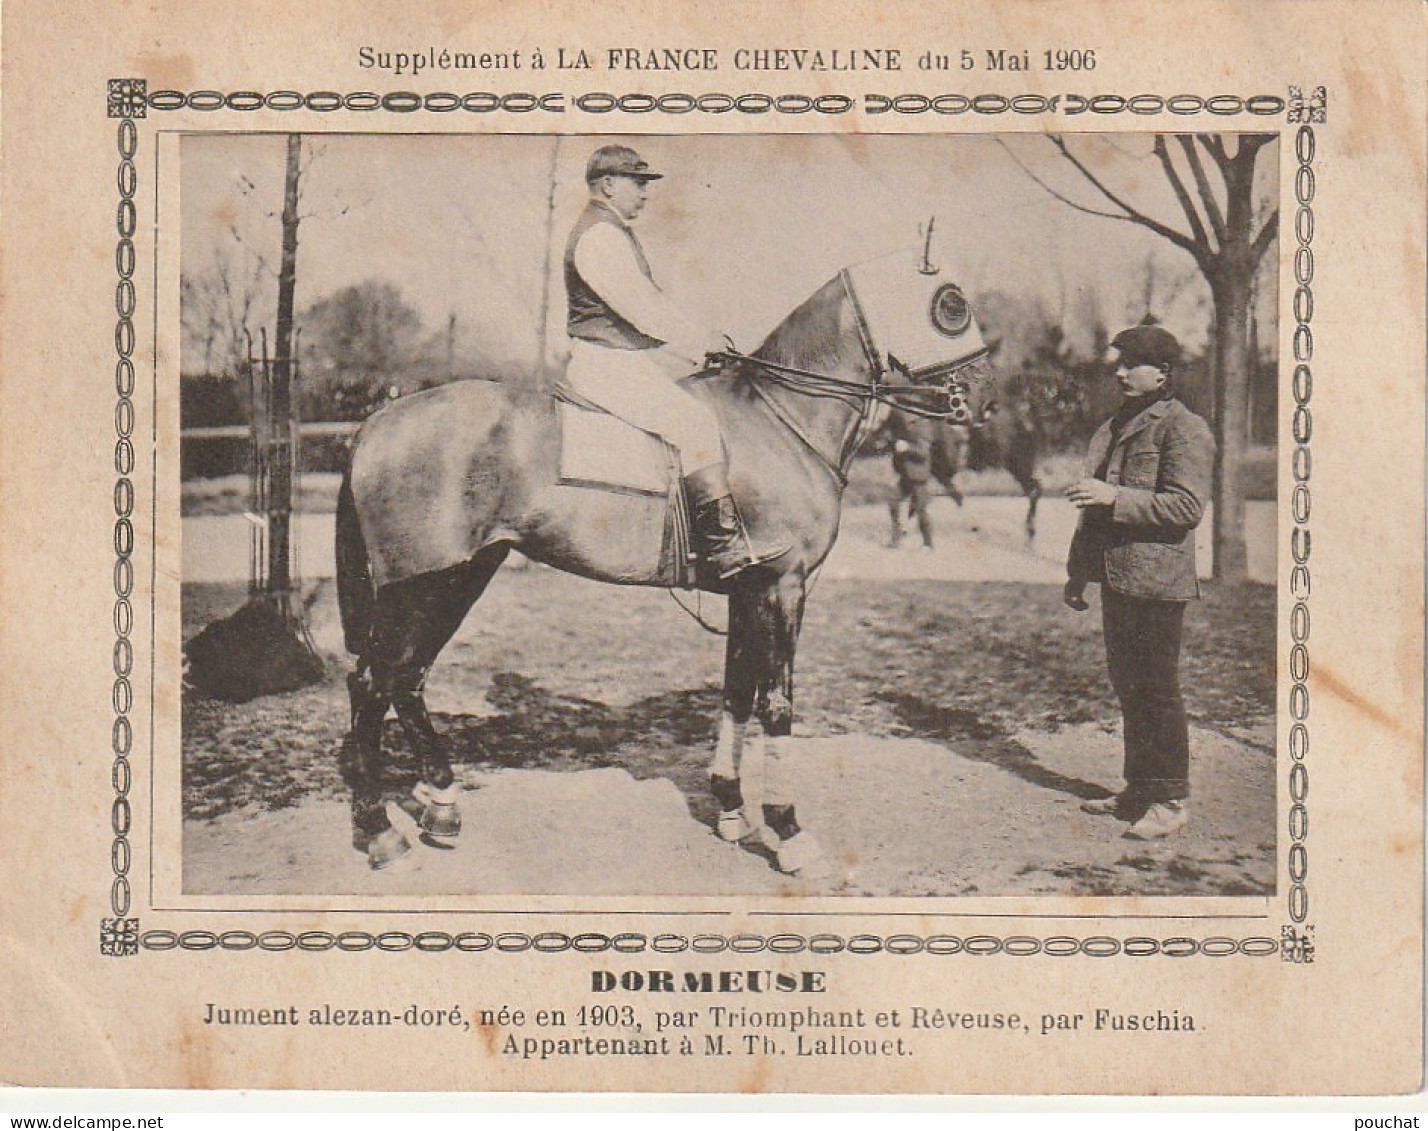 AA+ - " DORMEUSE " - JUMENT ALEZAN APPARTENANT A M. TH. LALLOUET - SUPPL. " FRANCE CHEVALINE " MAI 1906 - Ippica